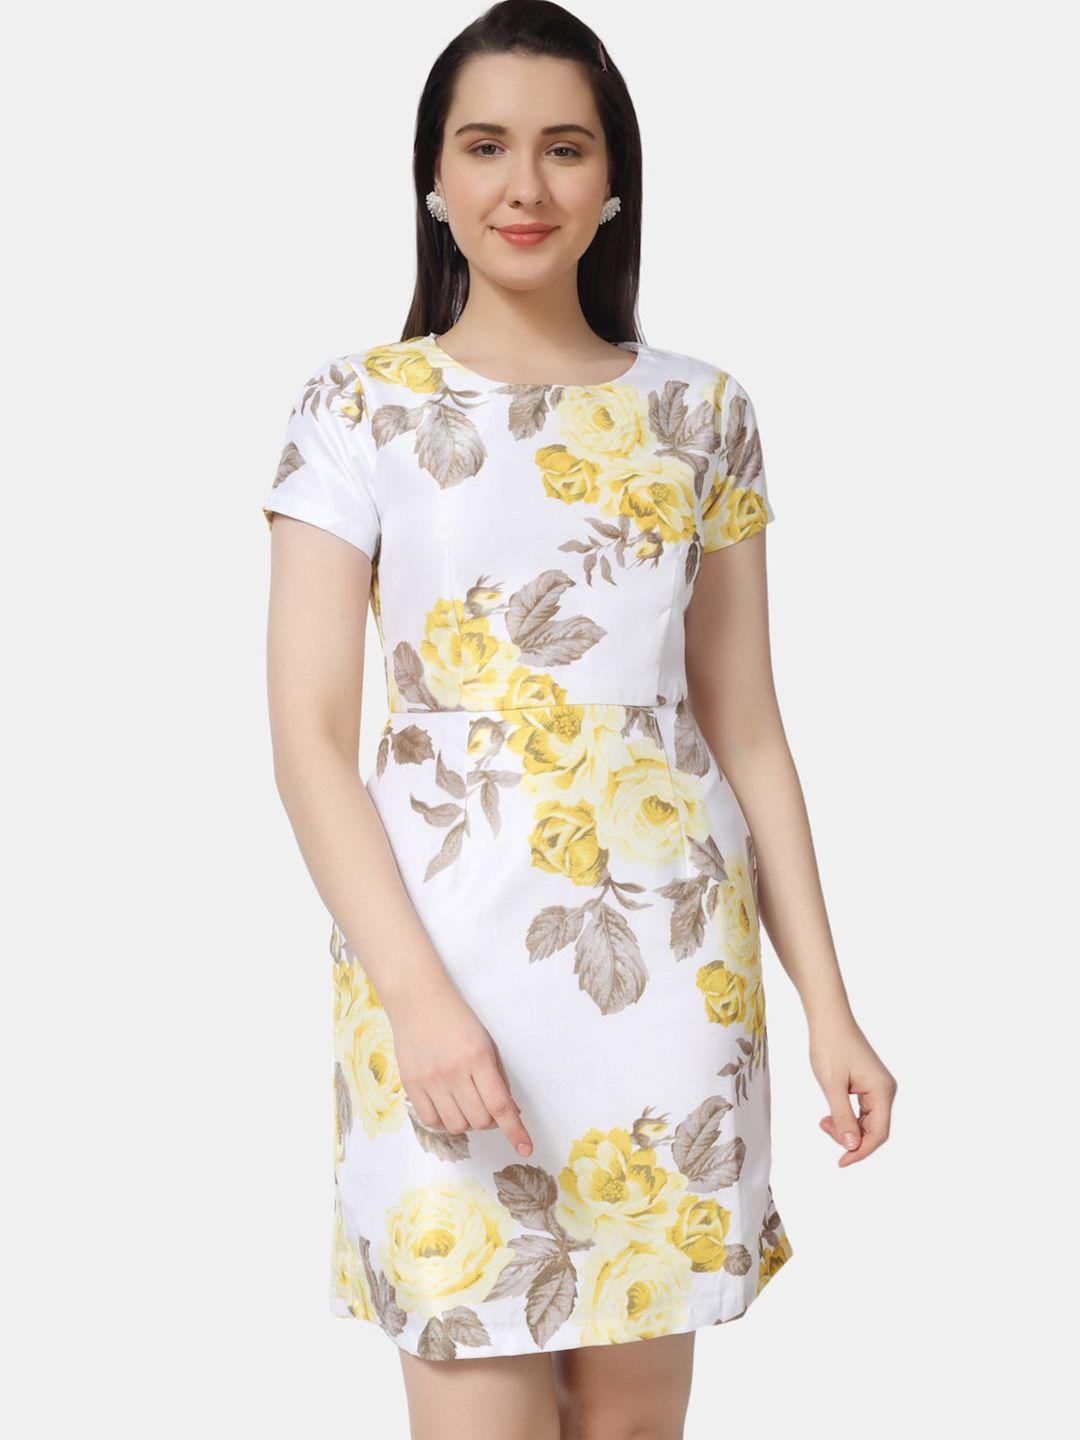 chanira la parezza white & yellow floral sheath dress